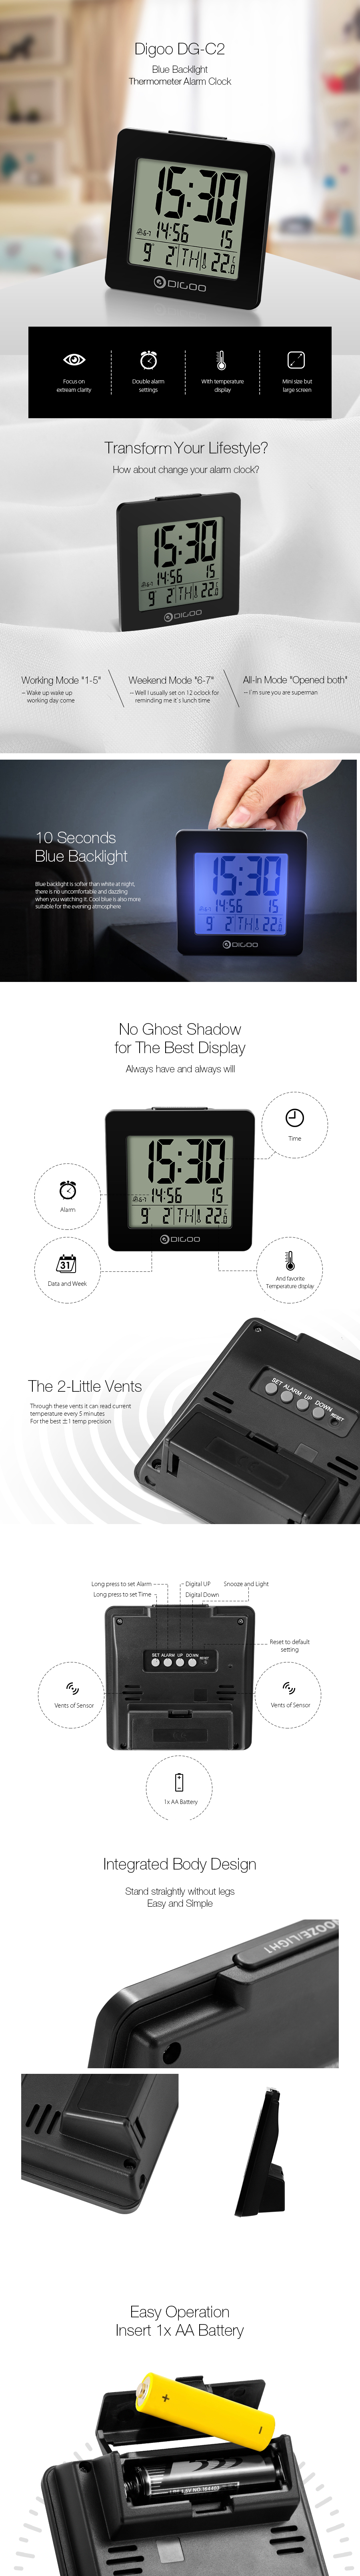 Digoo-DG-C2-Home-Comfort-Indoor-Digital-Blue-Backlit-LCD-Thermometer-Desk-Alarm-Clock-2-Alarm-Settin-1134272